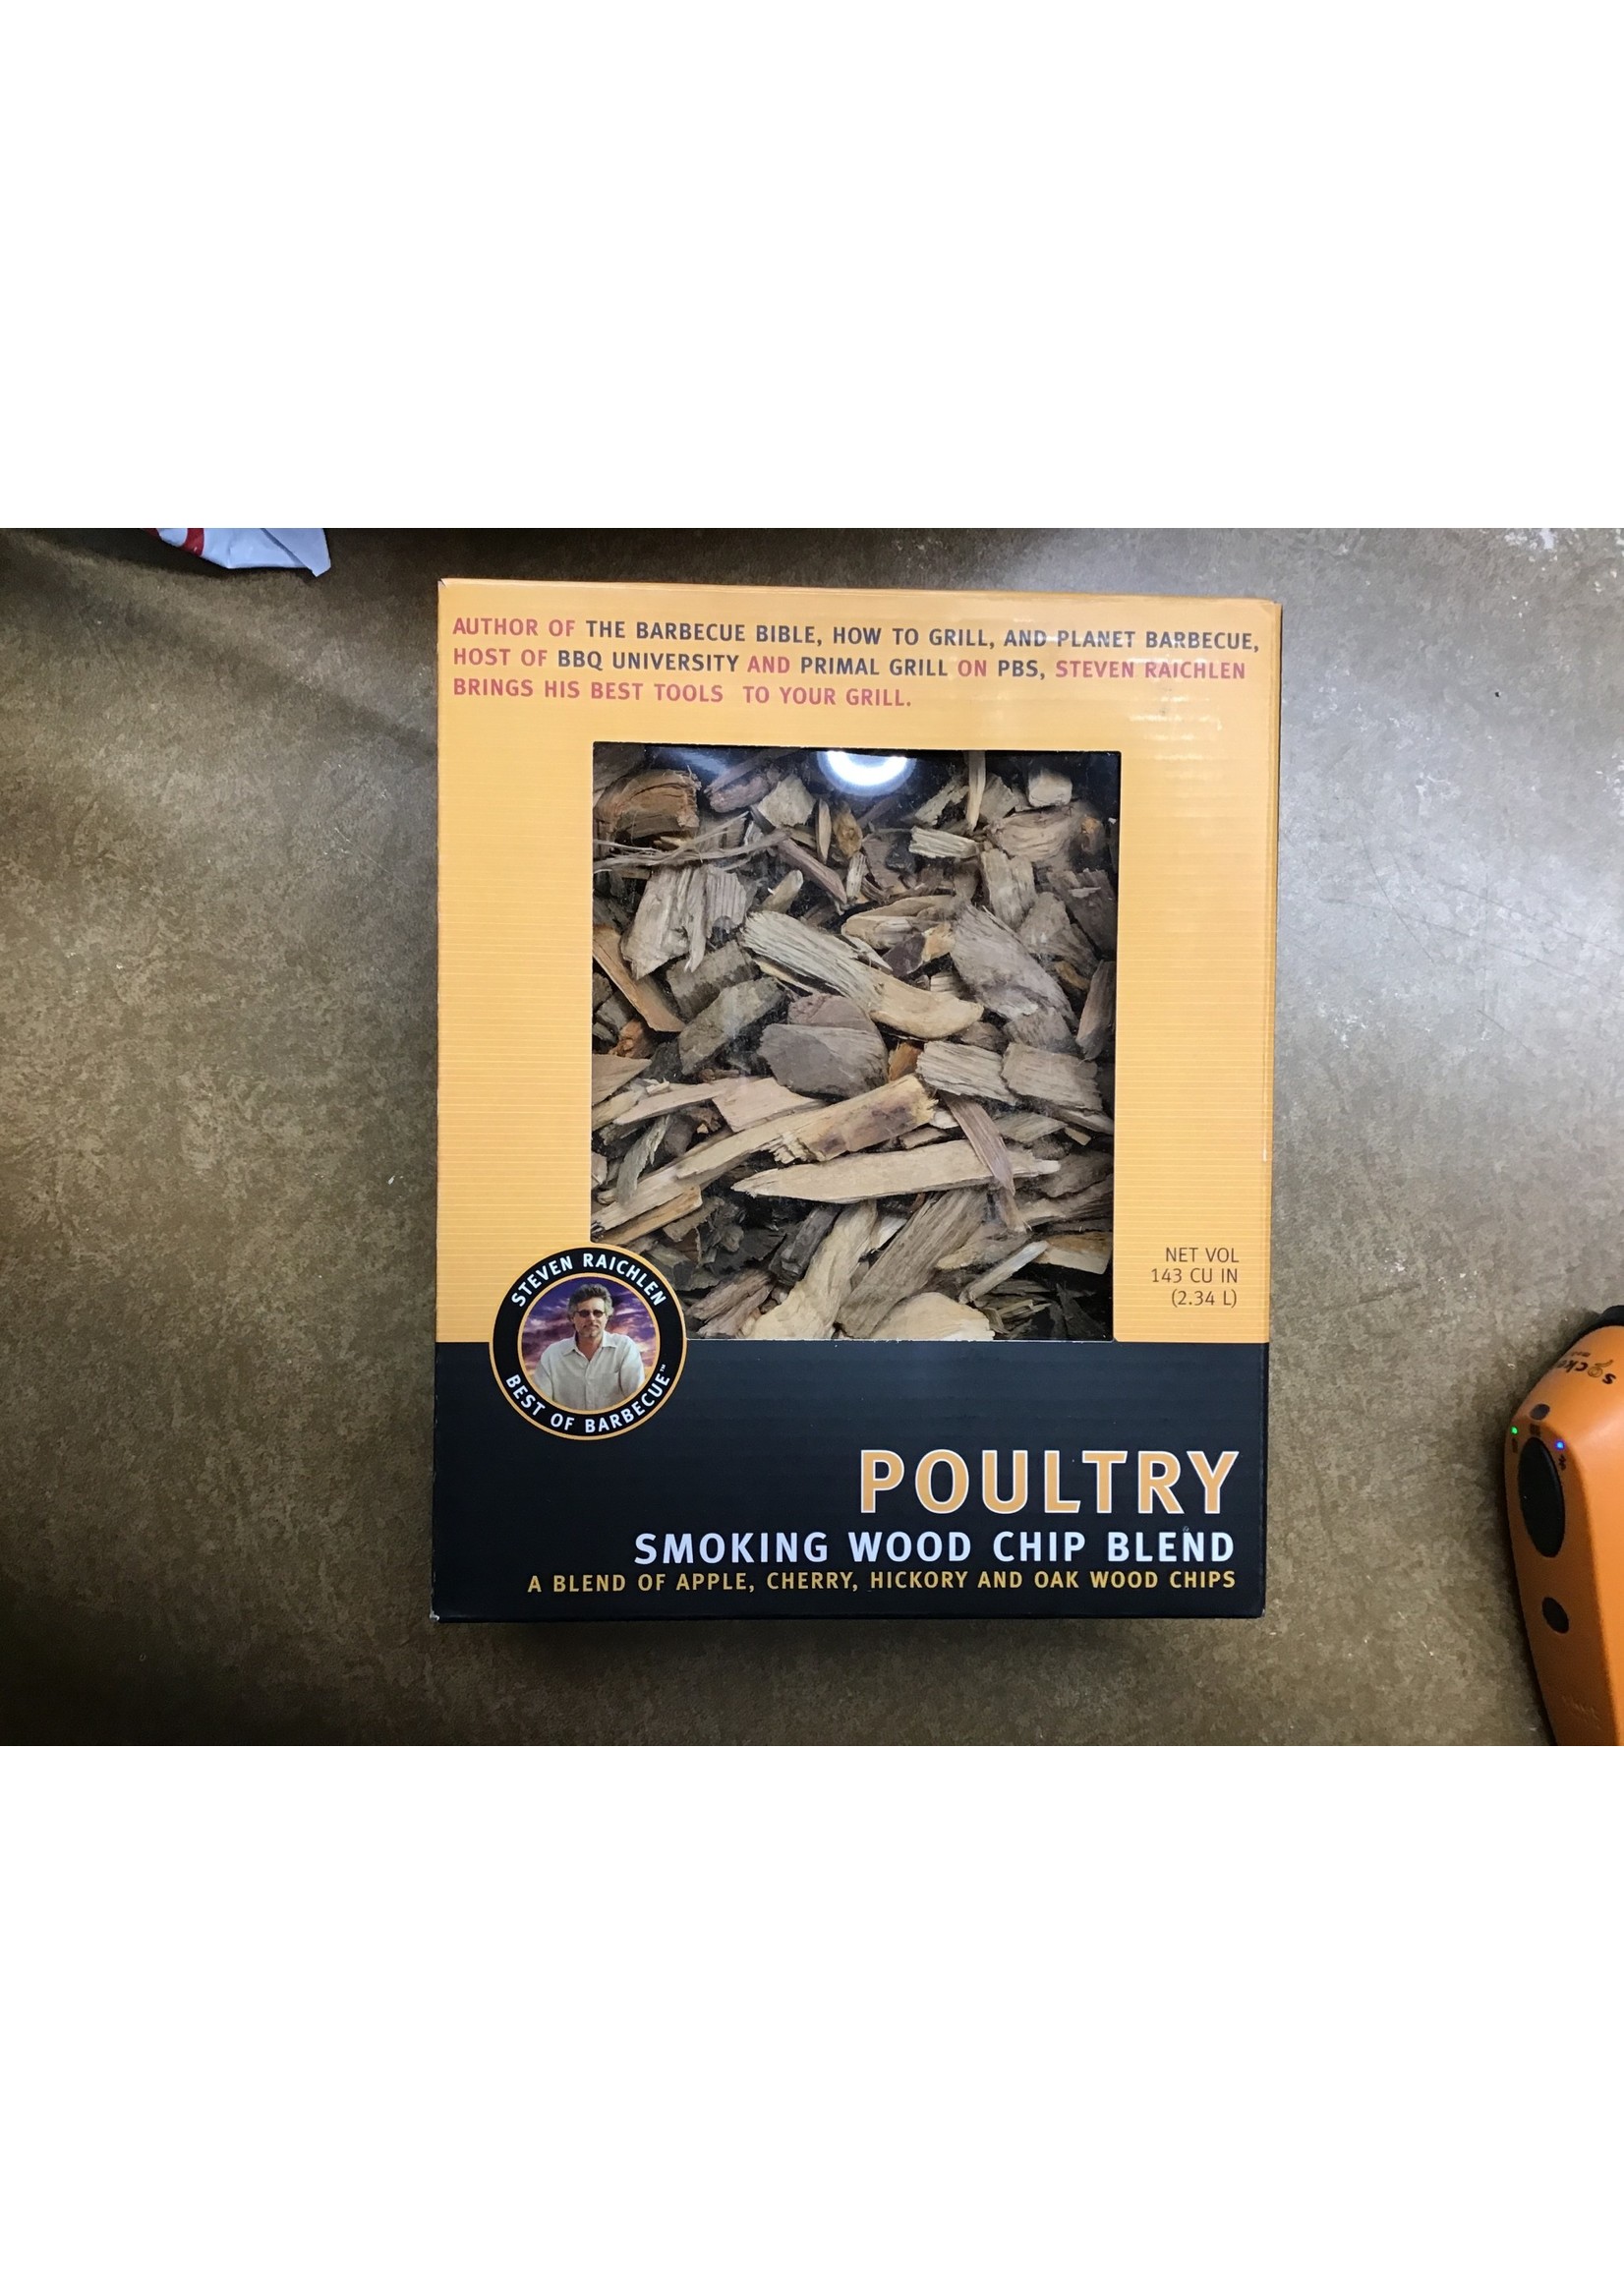 Steven Raichlen Best of BBQ- Poultry Smoking Wood Chip Blend 143cu in box